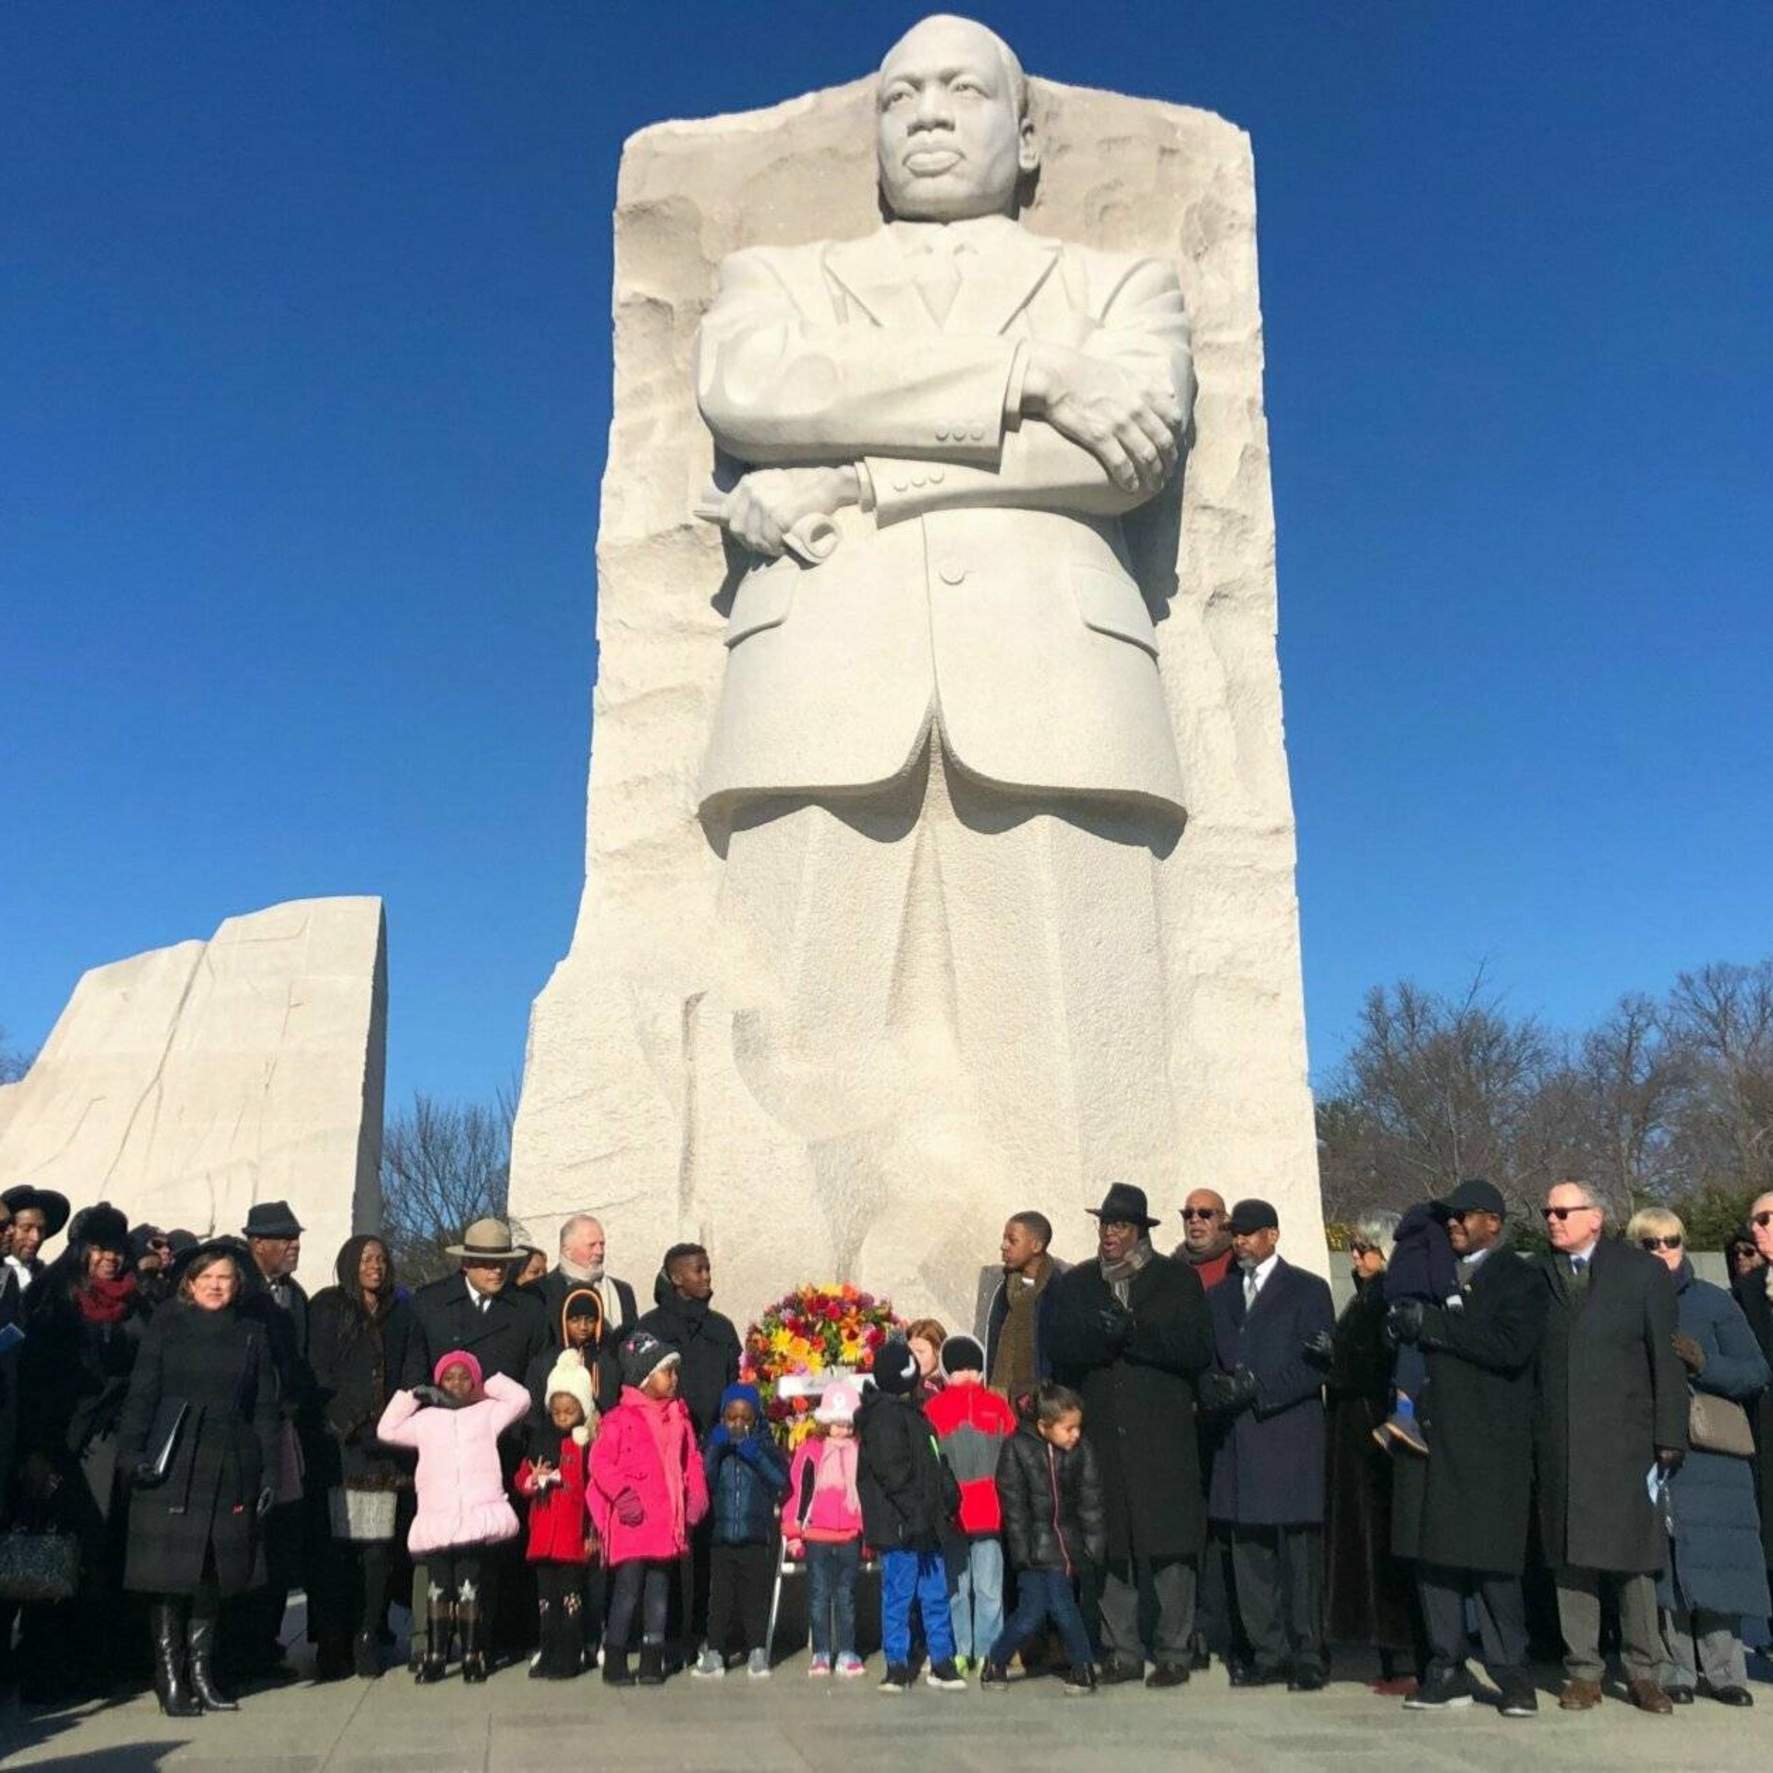 Martin Luther King Jr. Memorial in Washington D.C.